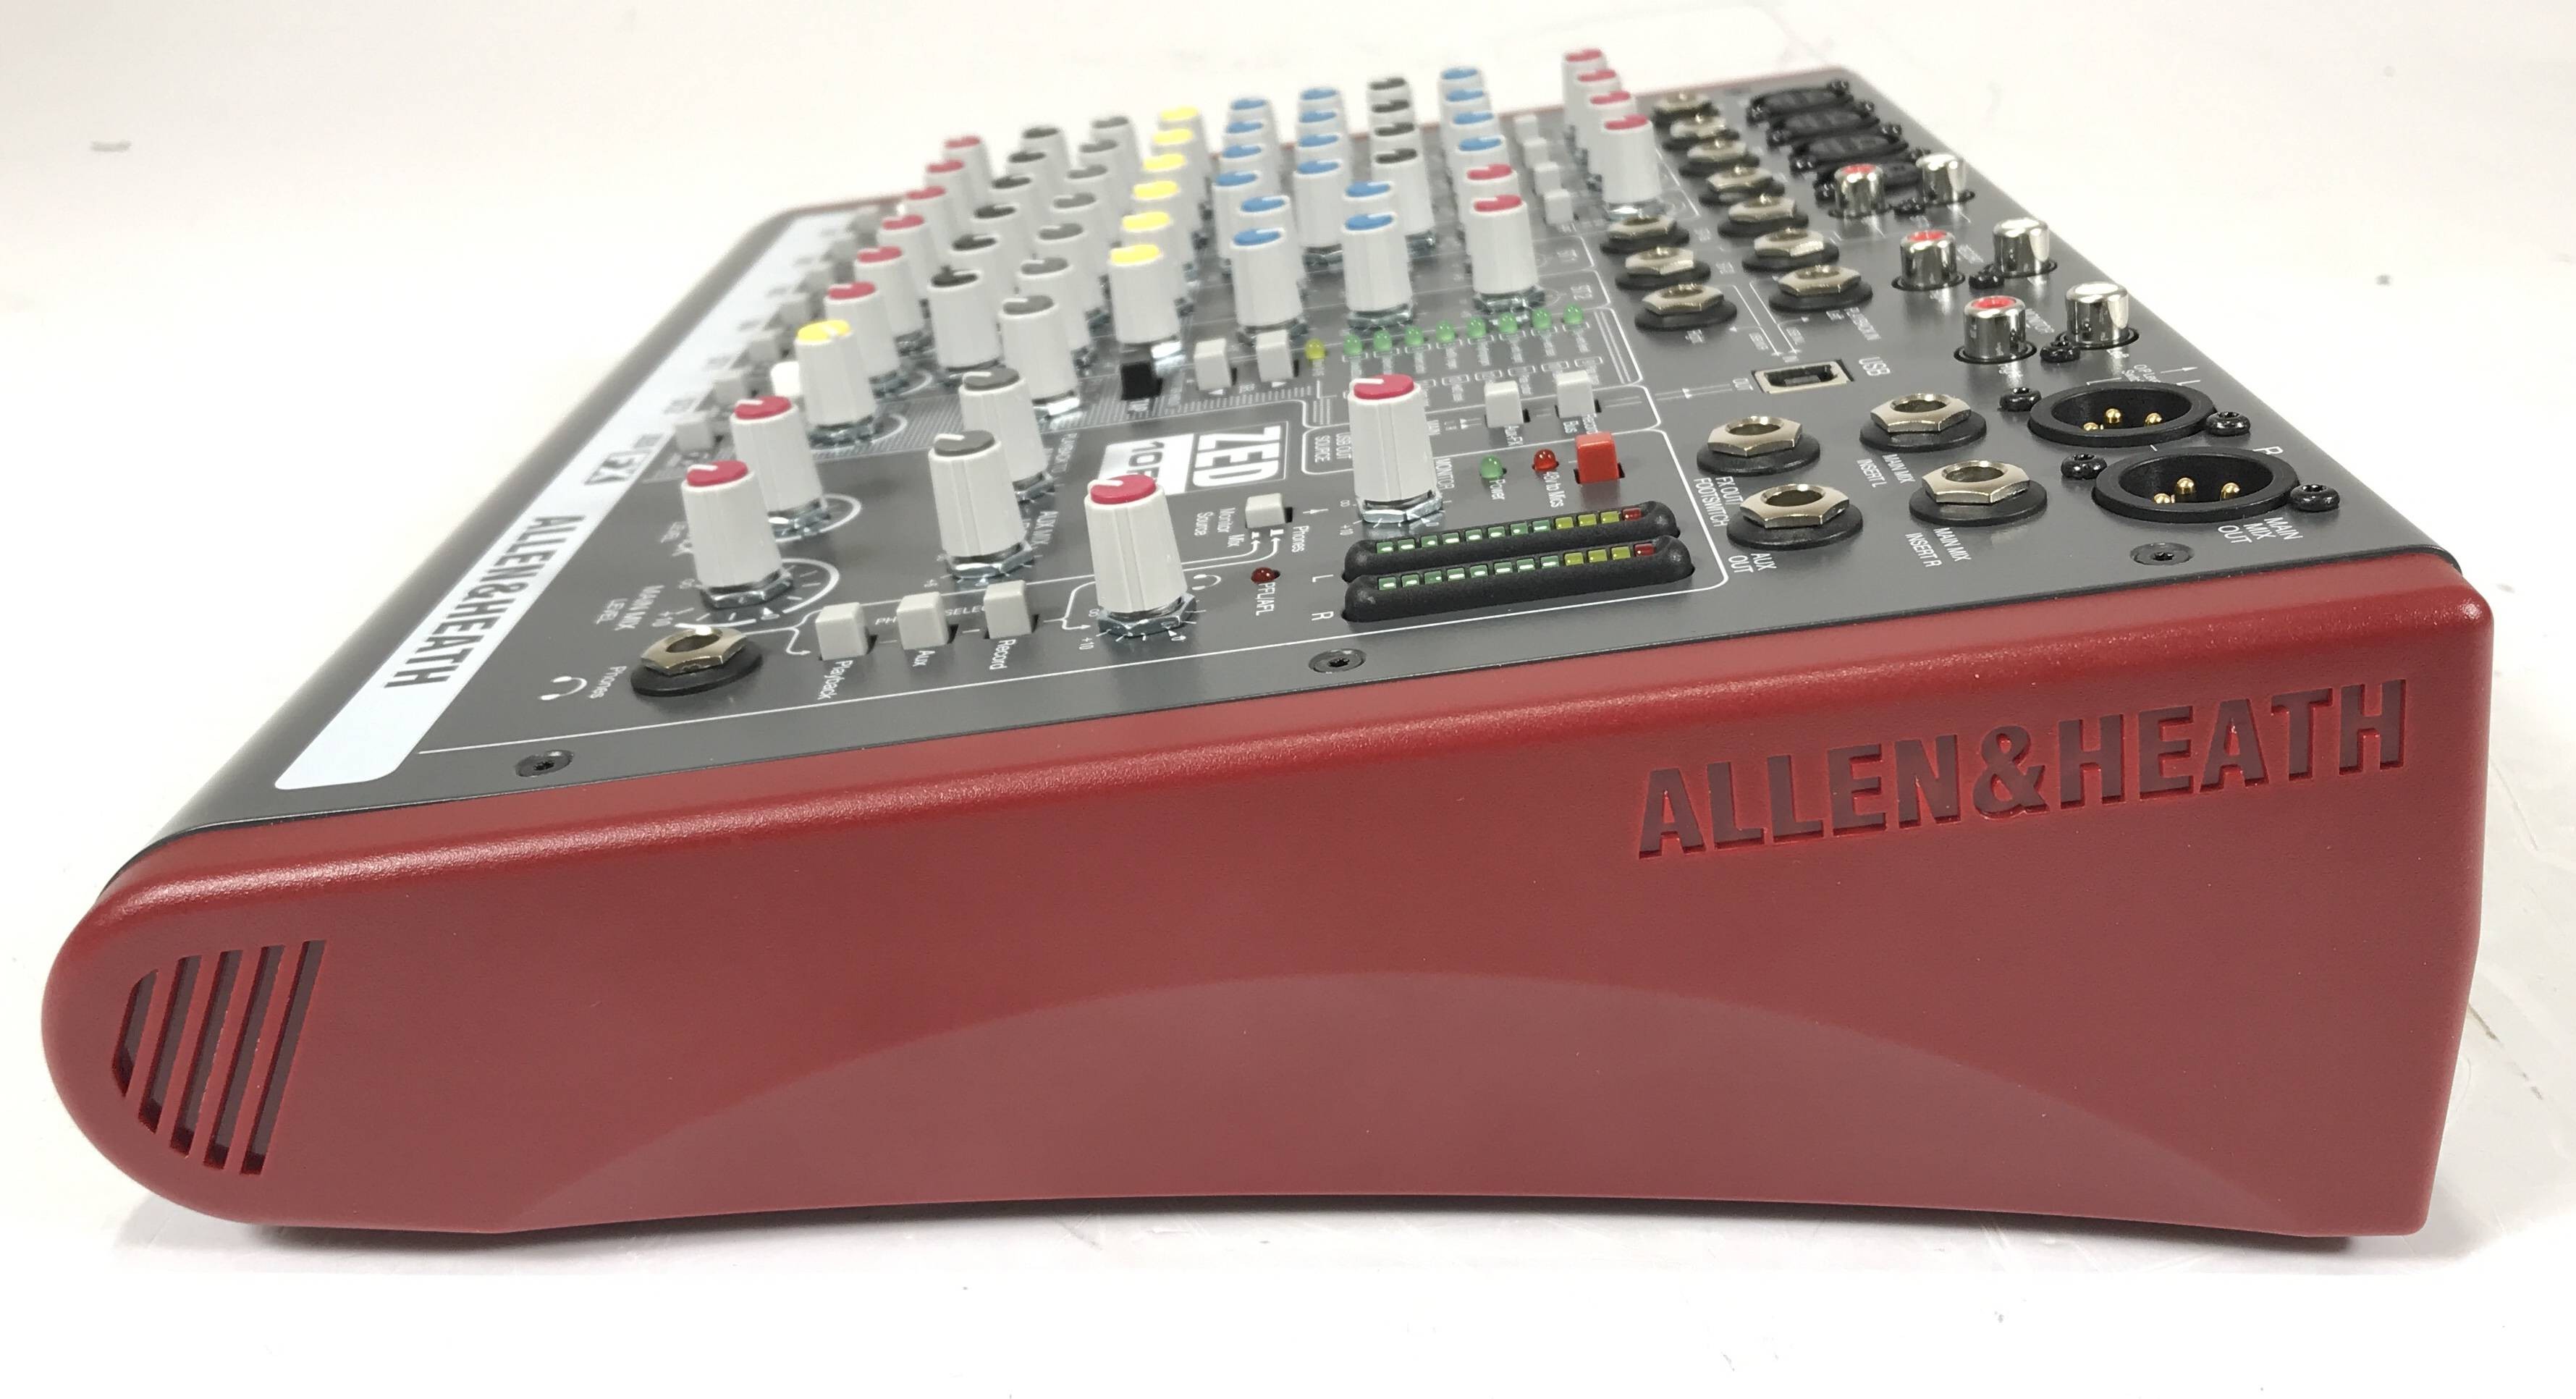 Allen & Heath Zed 10 FX | Mixer Allen & Heath